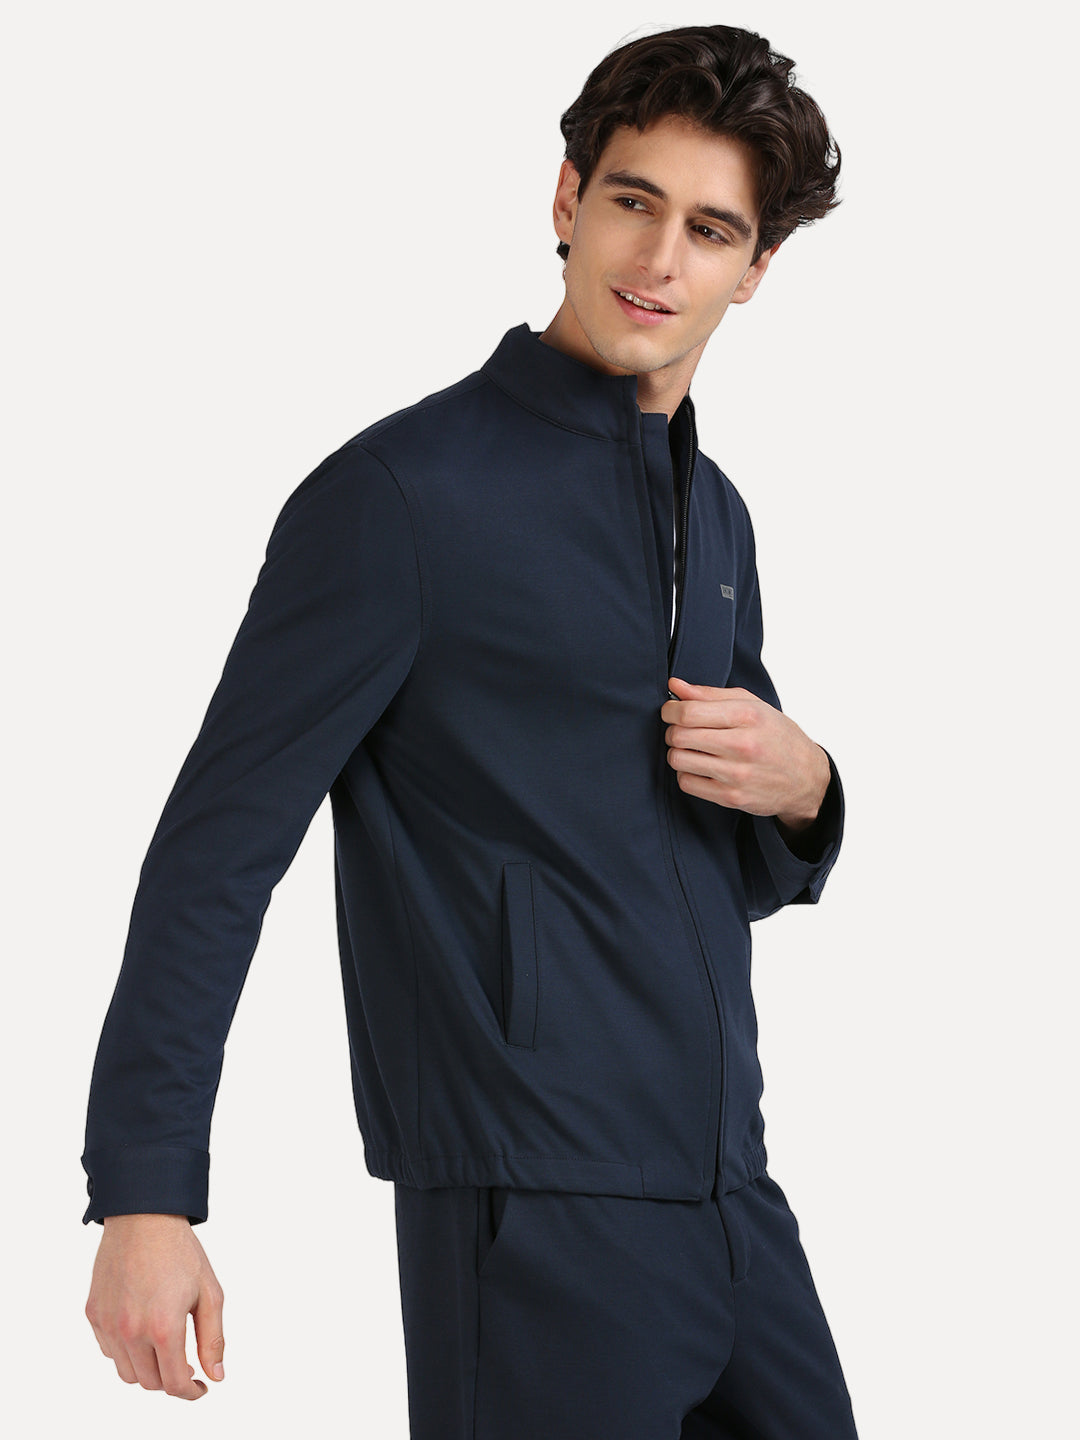 Full Sleeve Solid Men Jacket online